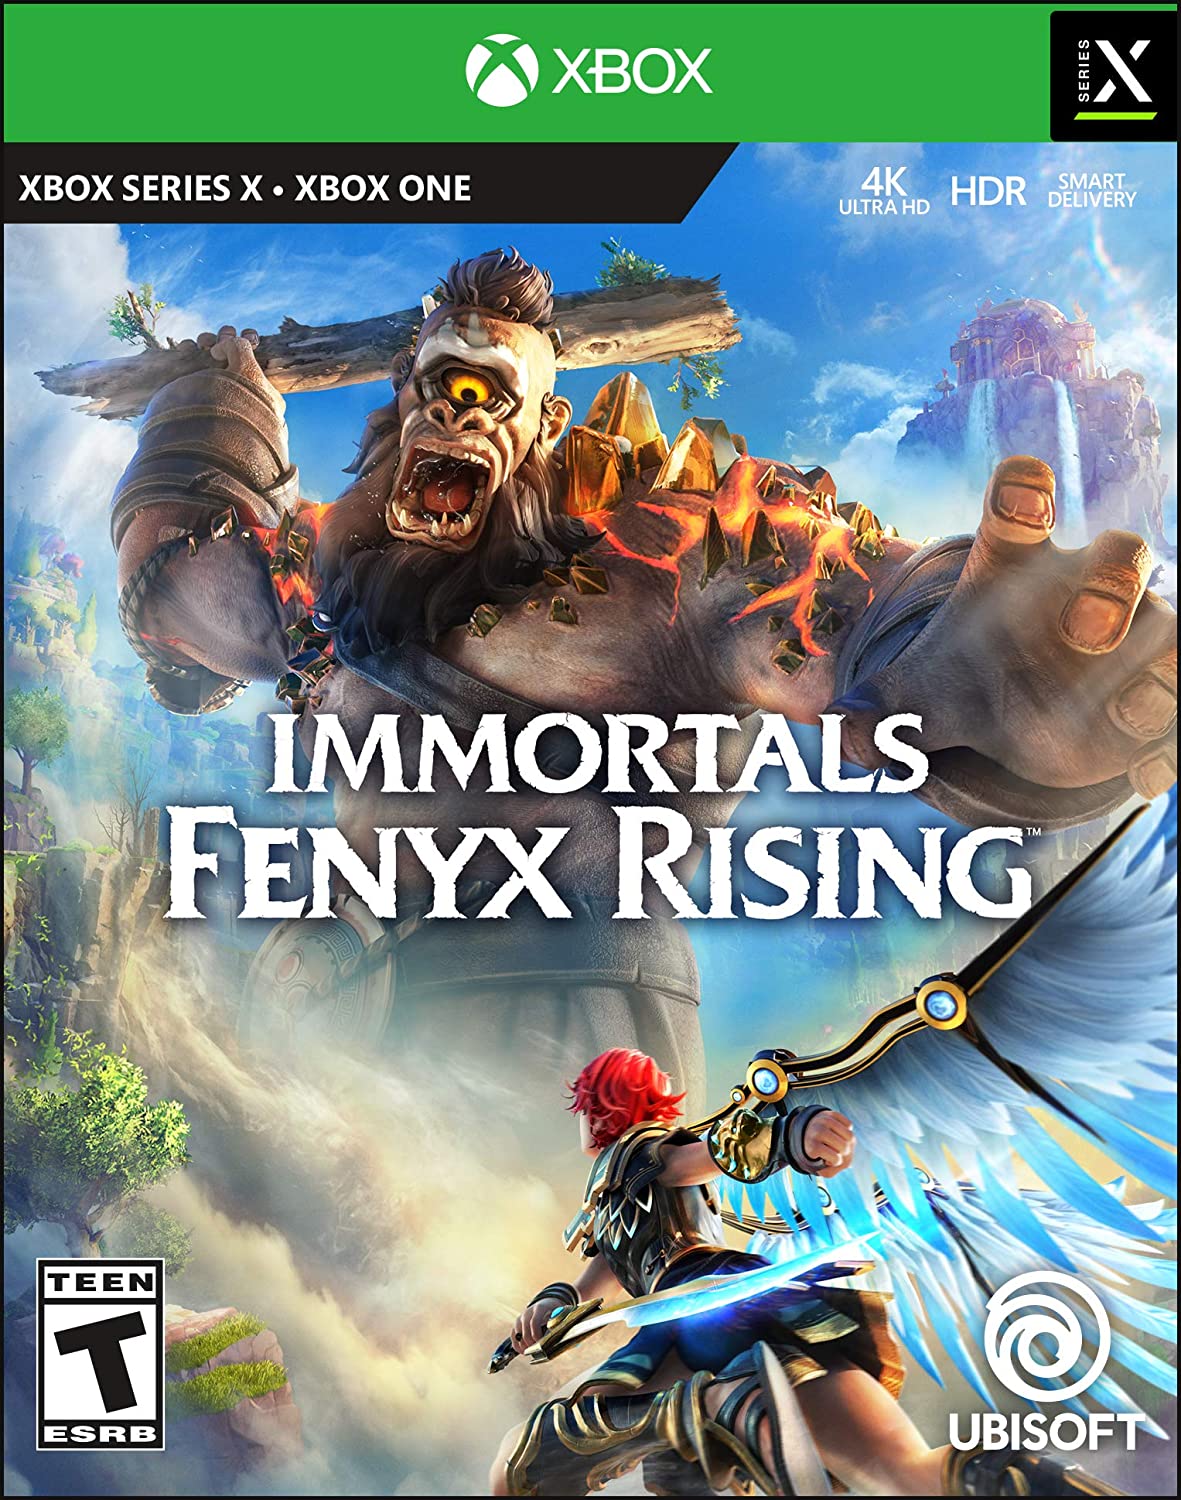 immortals fenyx rising update